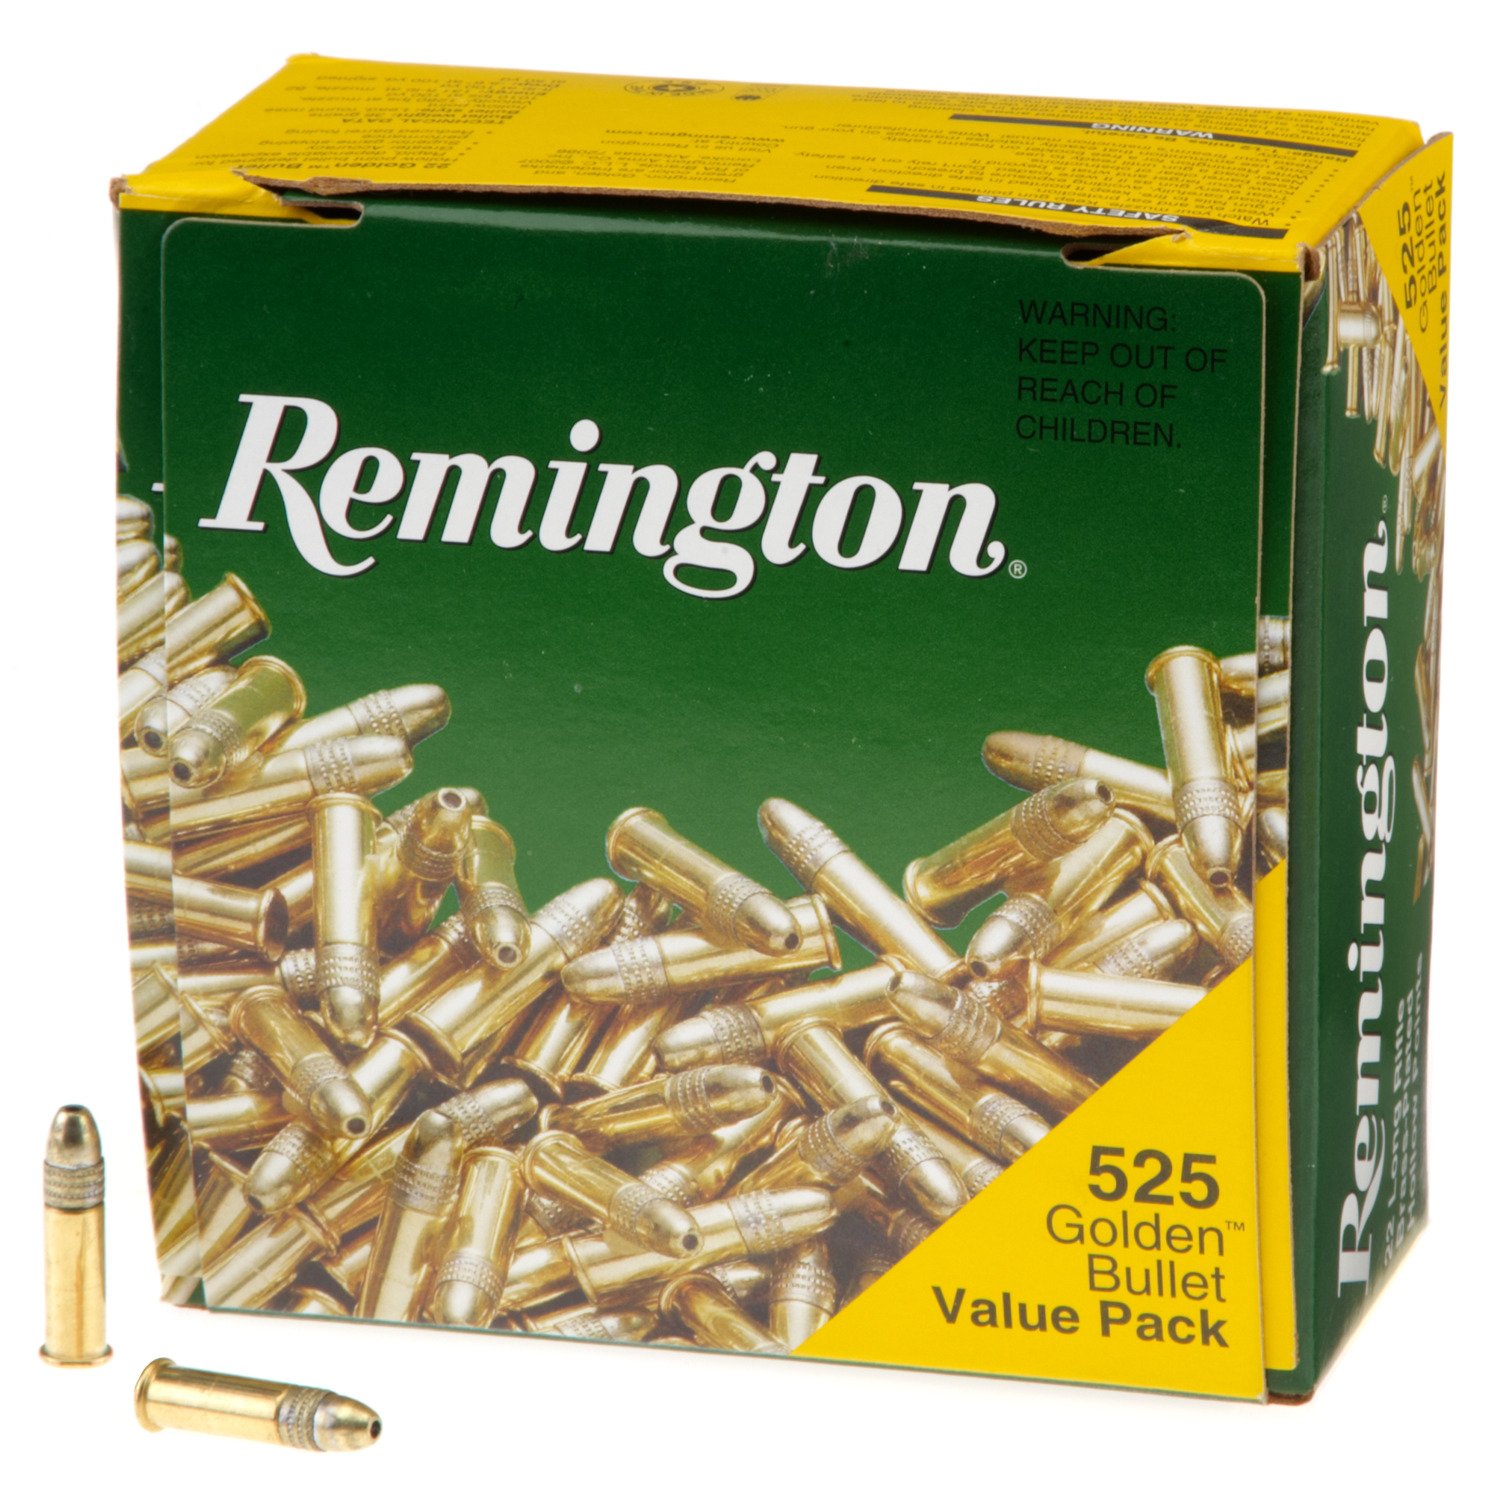 Remington Golden Bullet HP .22 LR 36-Grain Rimfire Rifle Ammunition - 525 Rounds                                                 - view number 1 selected